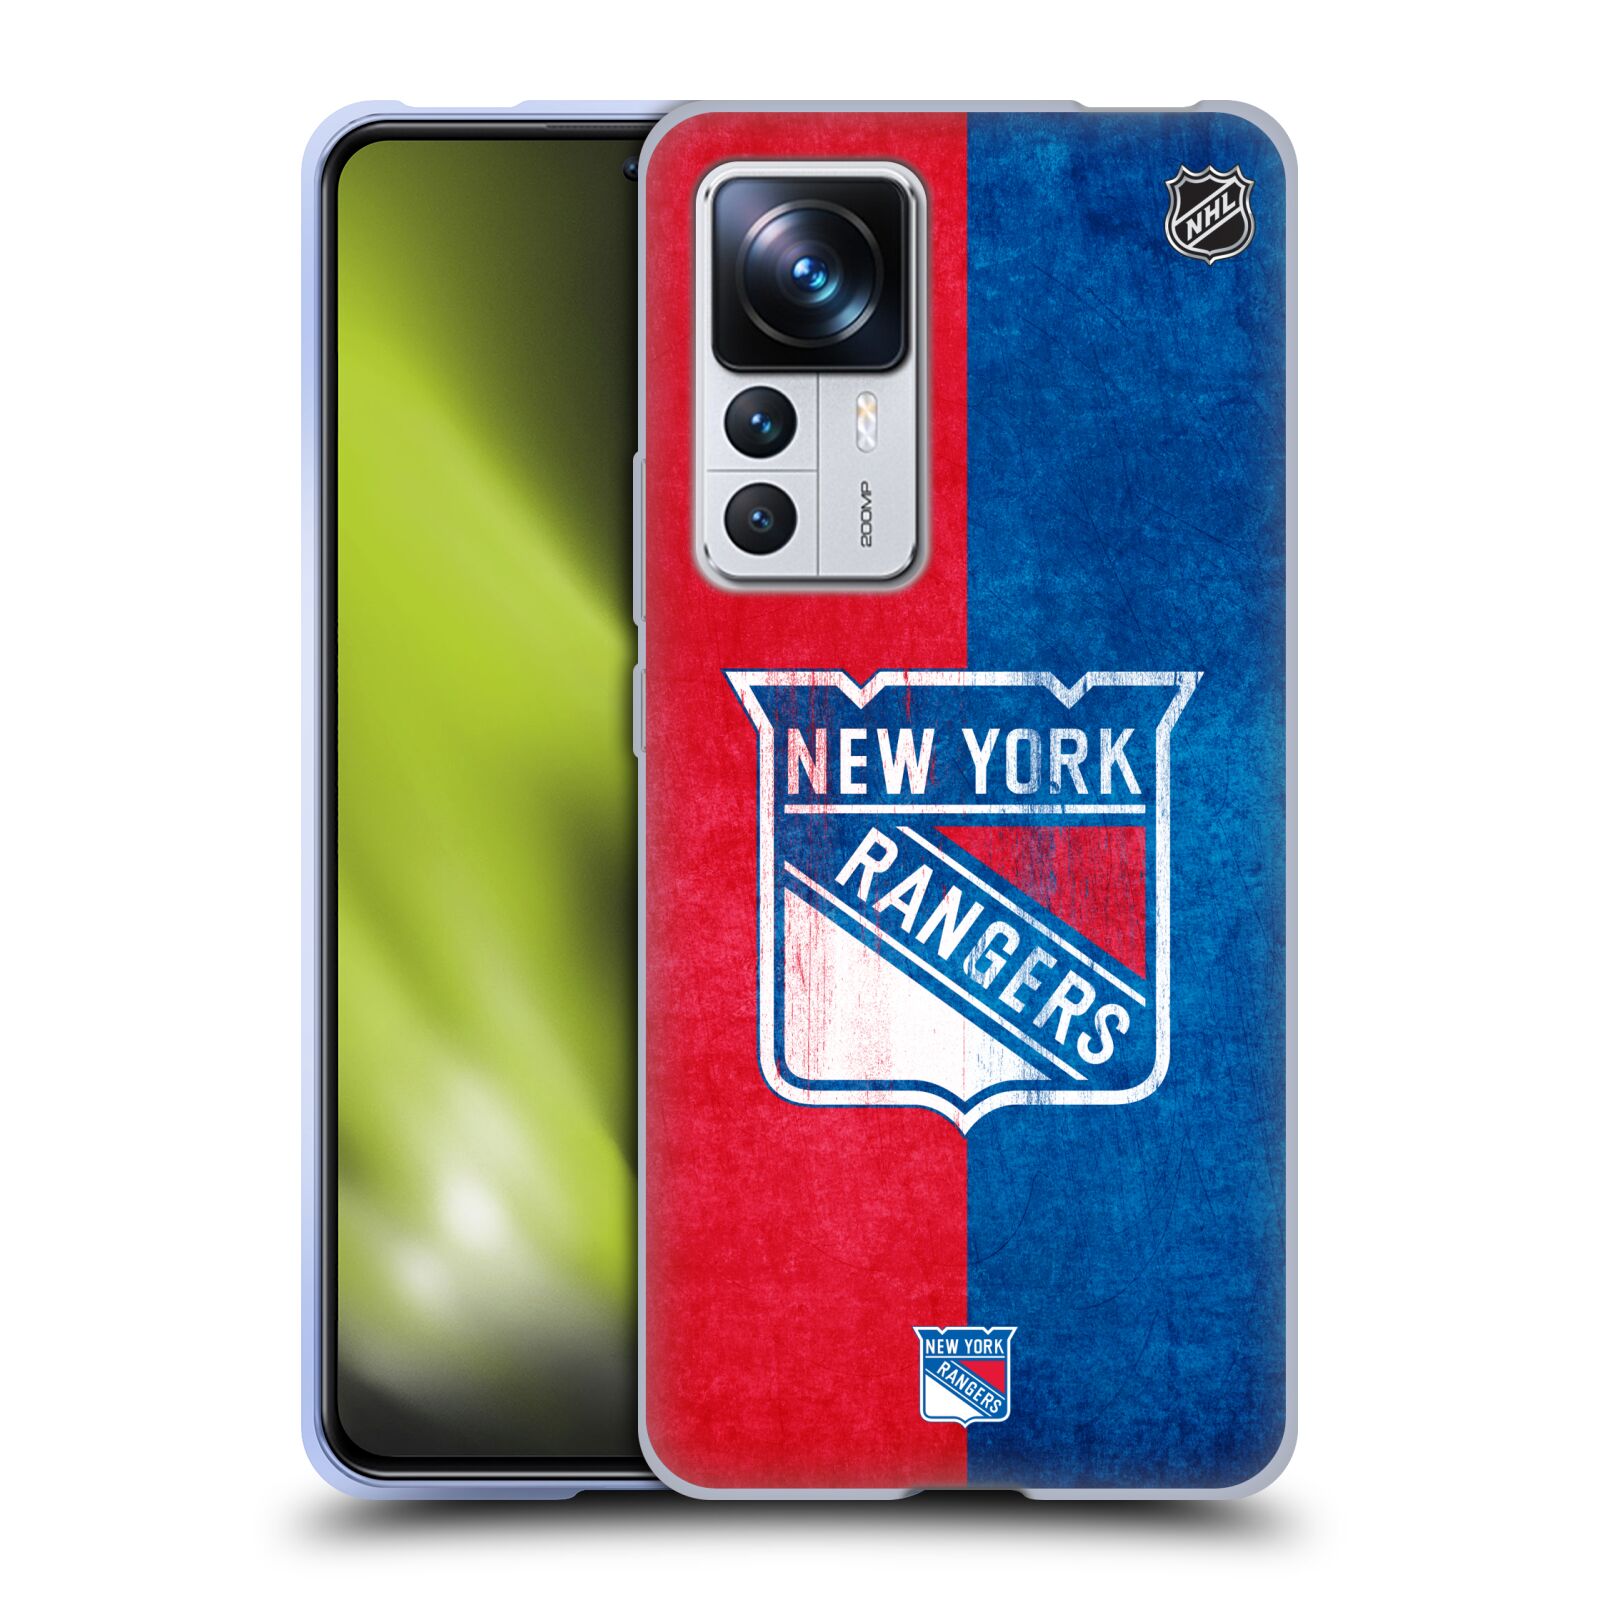 Silikonové pouzdro na mobil Xiaomi 12T / 12T Pro - NHL - Půlené logo New York Rangers (Silikonový kryt, obal, pouzdro na mobilní telefon Xiaomi 12T / 12T Pro s licencovaným motivem NHL - Půlené logo New York Rangers)